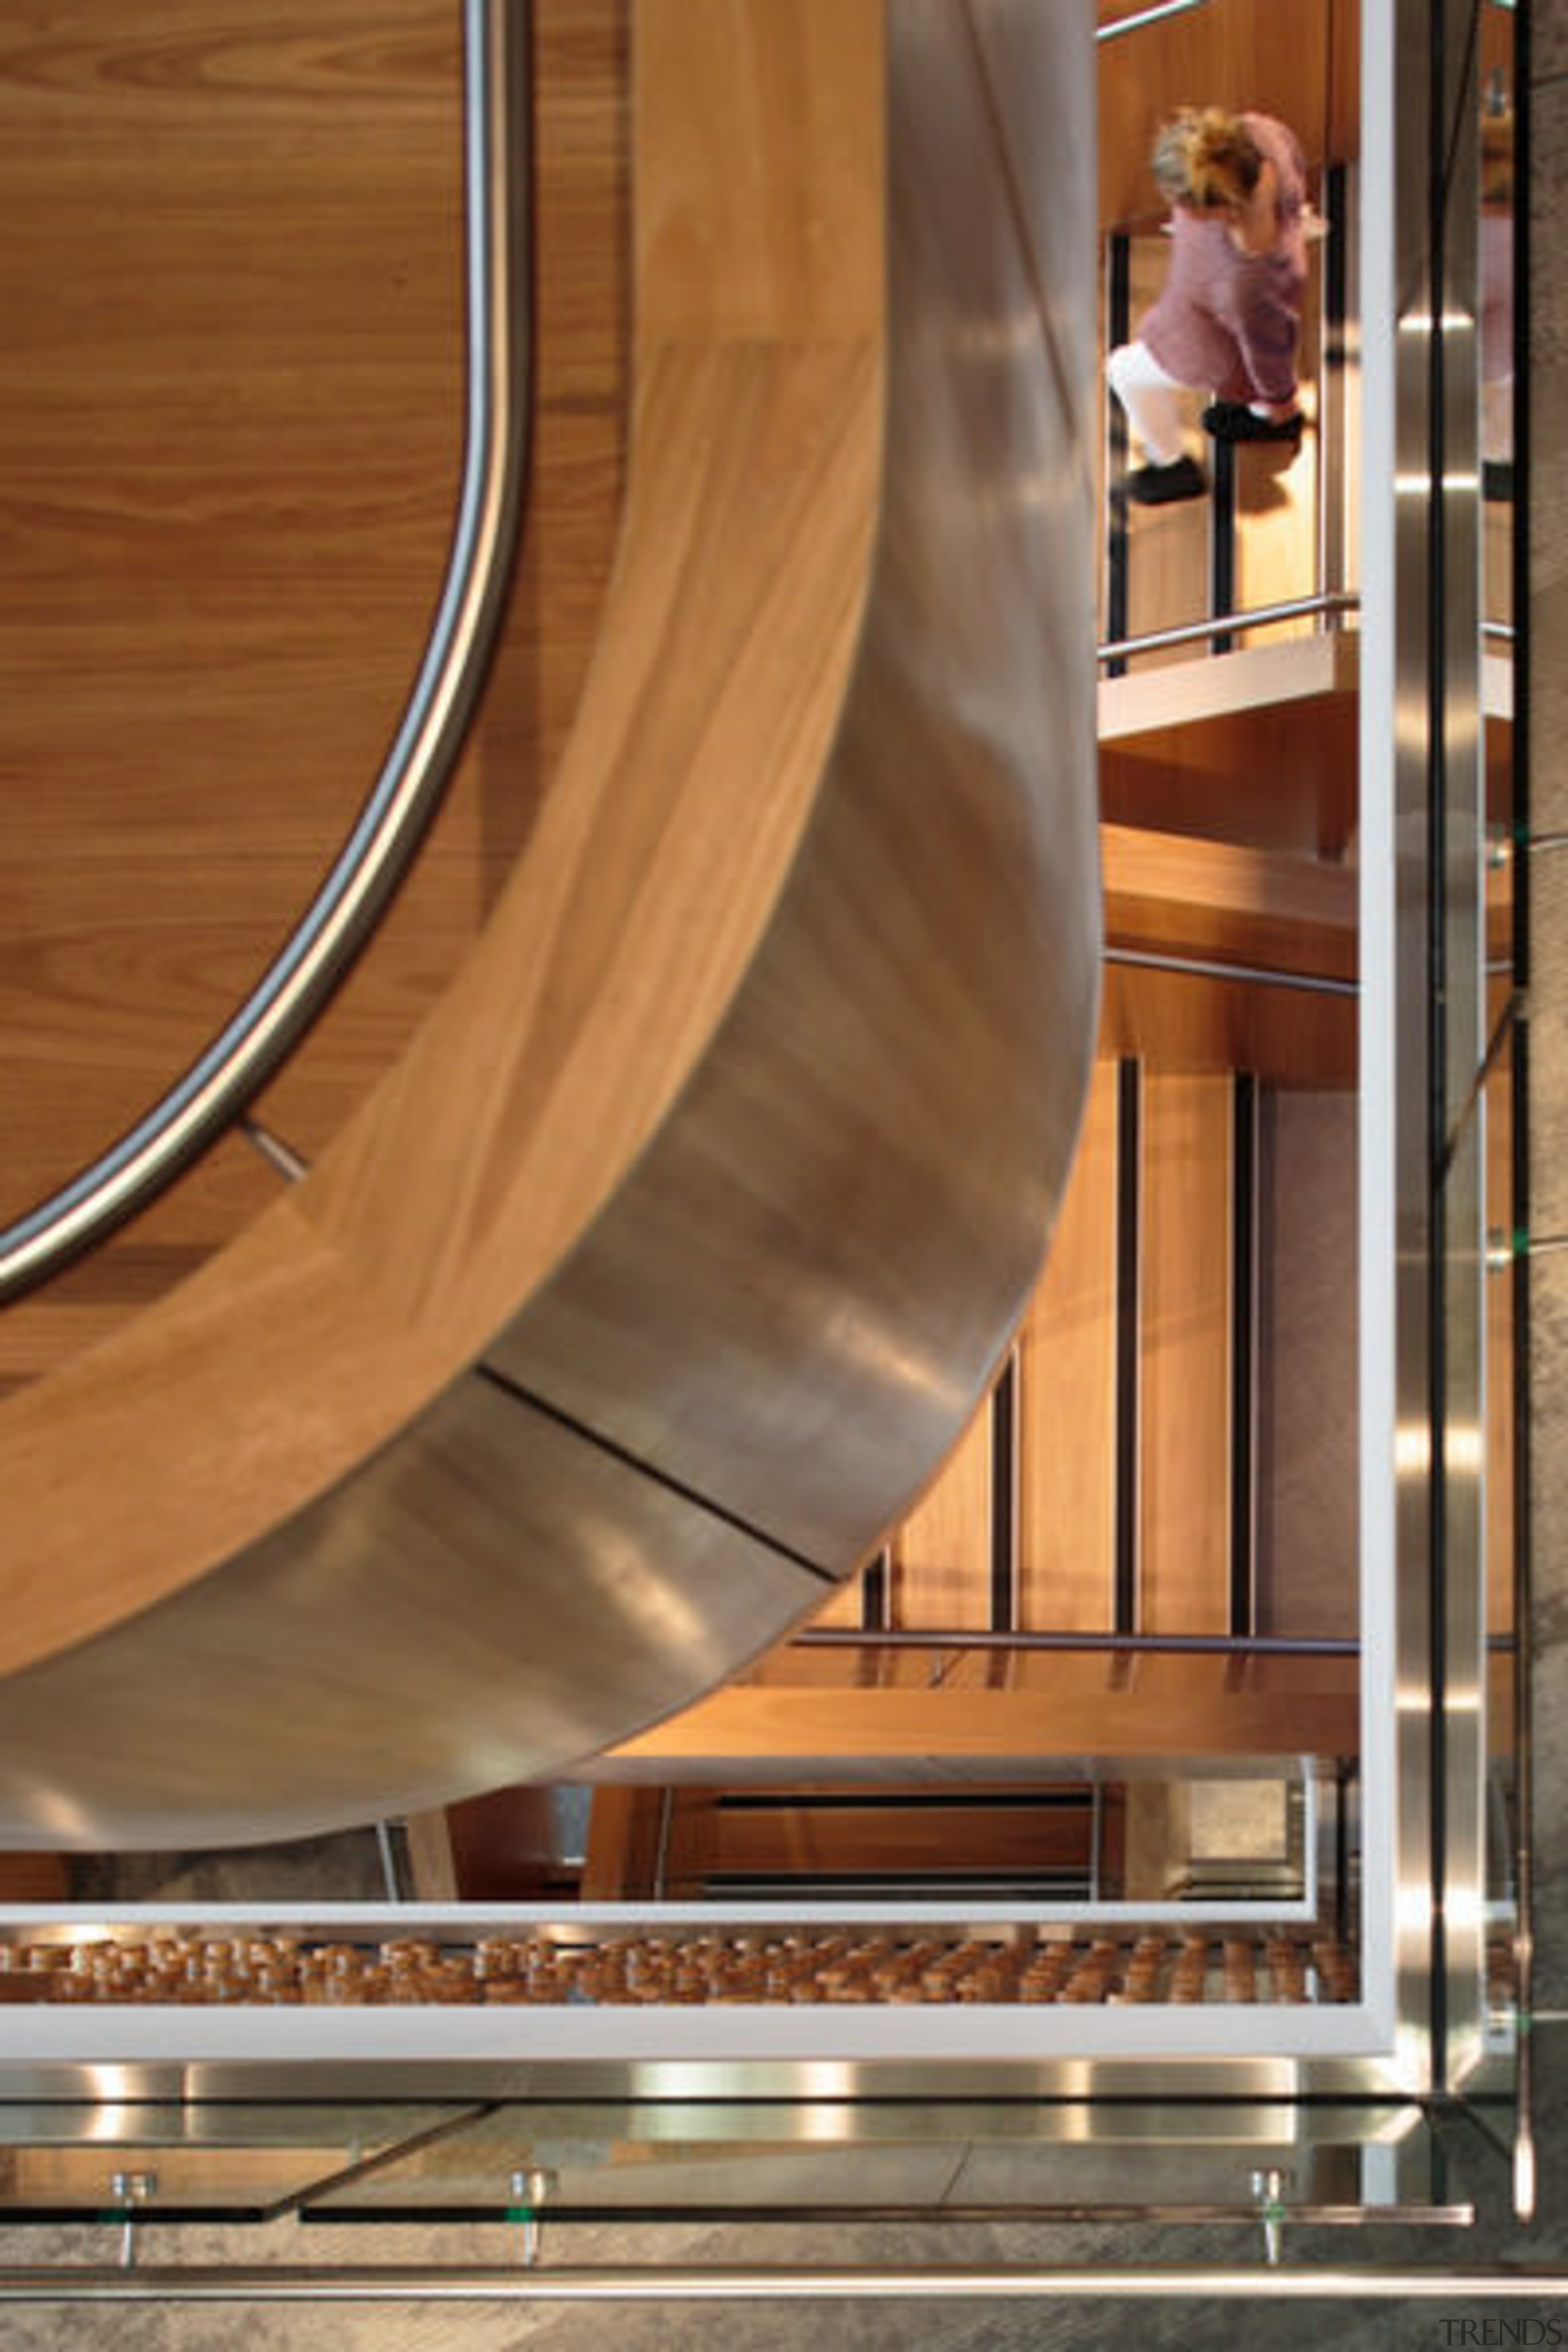 icare – dwp | design worldwide partnership - architecture, floor, flooring, interior design, stairs, wood, brown